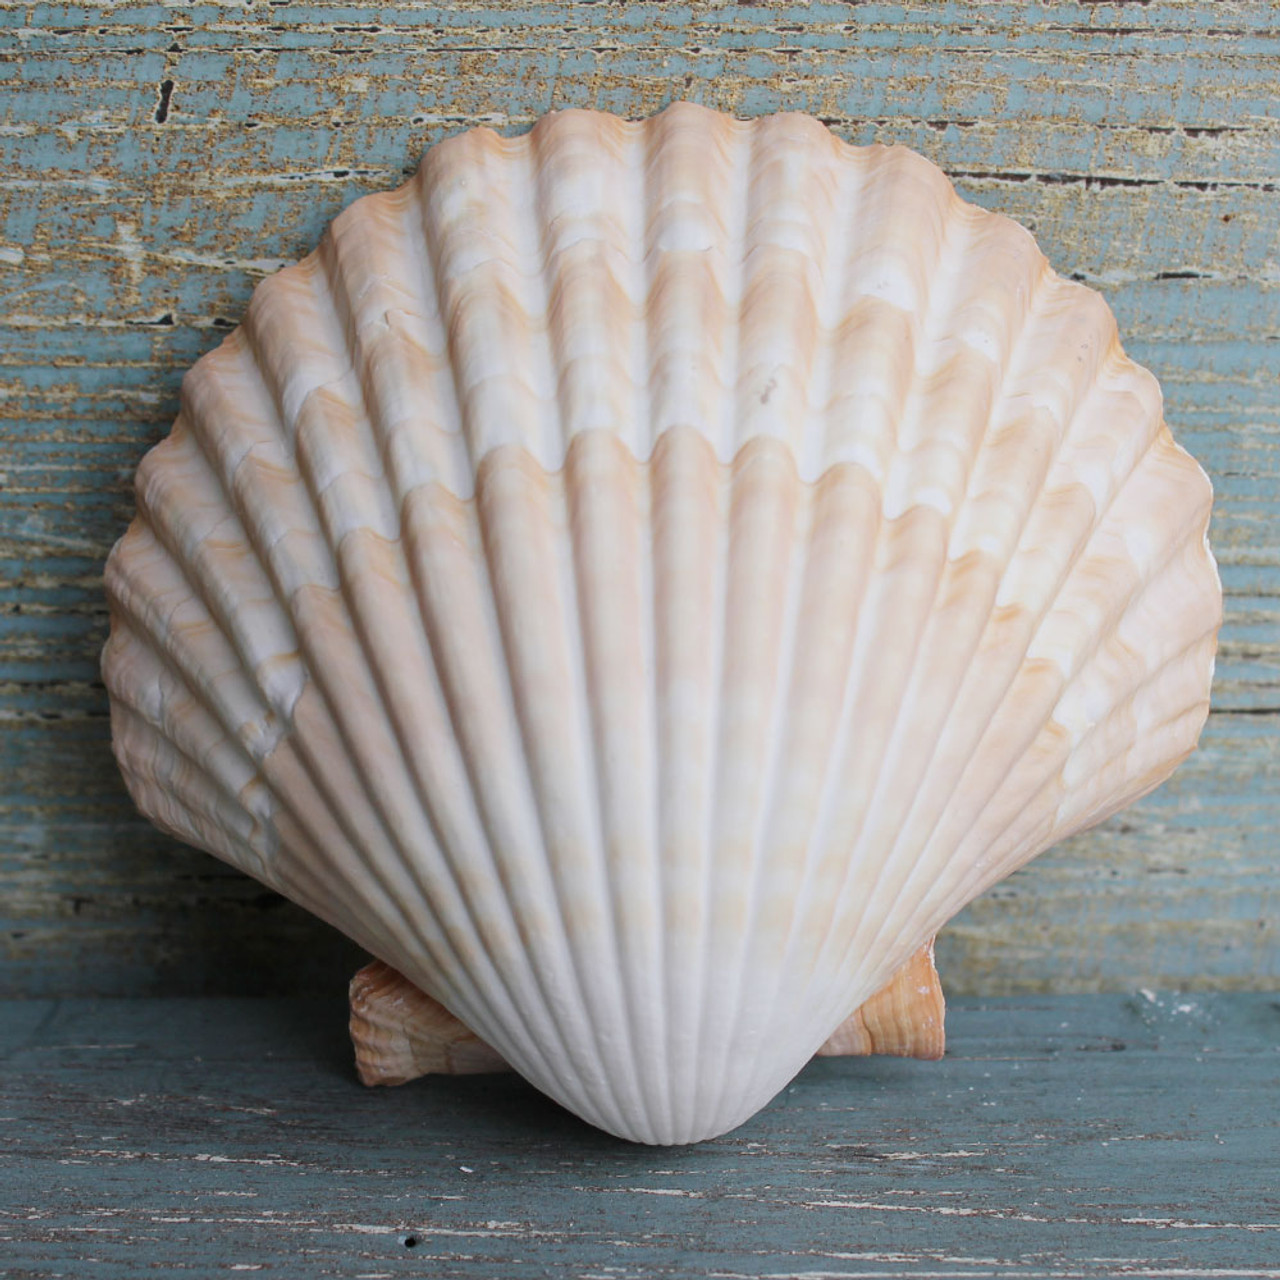 Yellow Cup Seashell